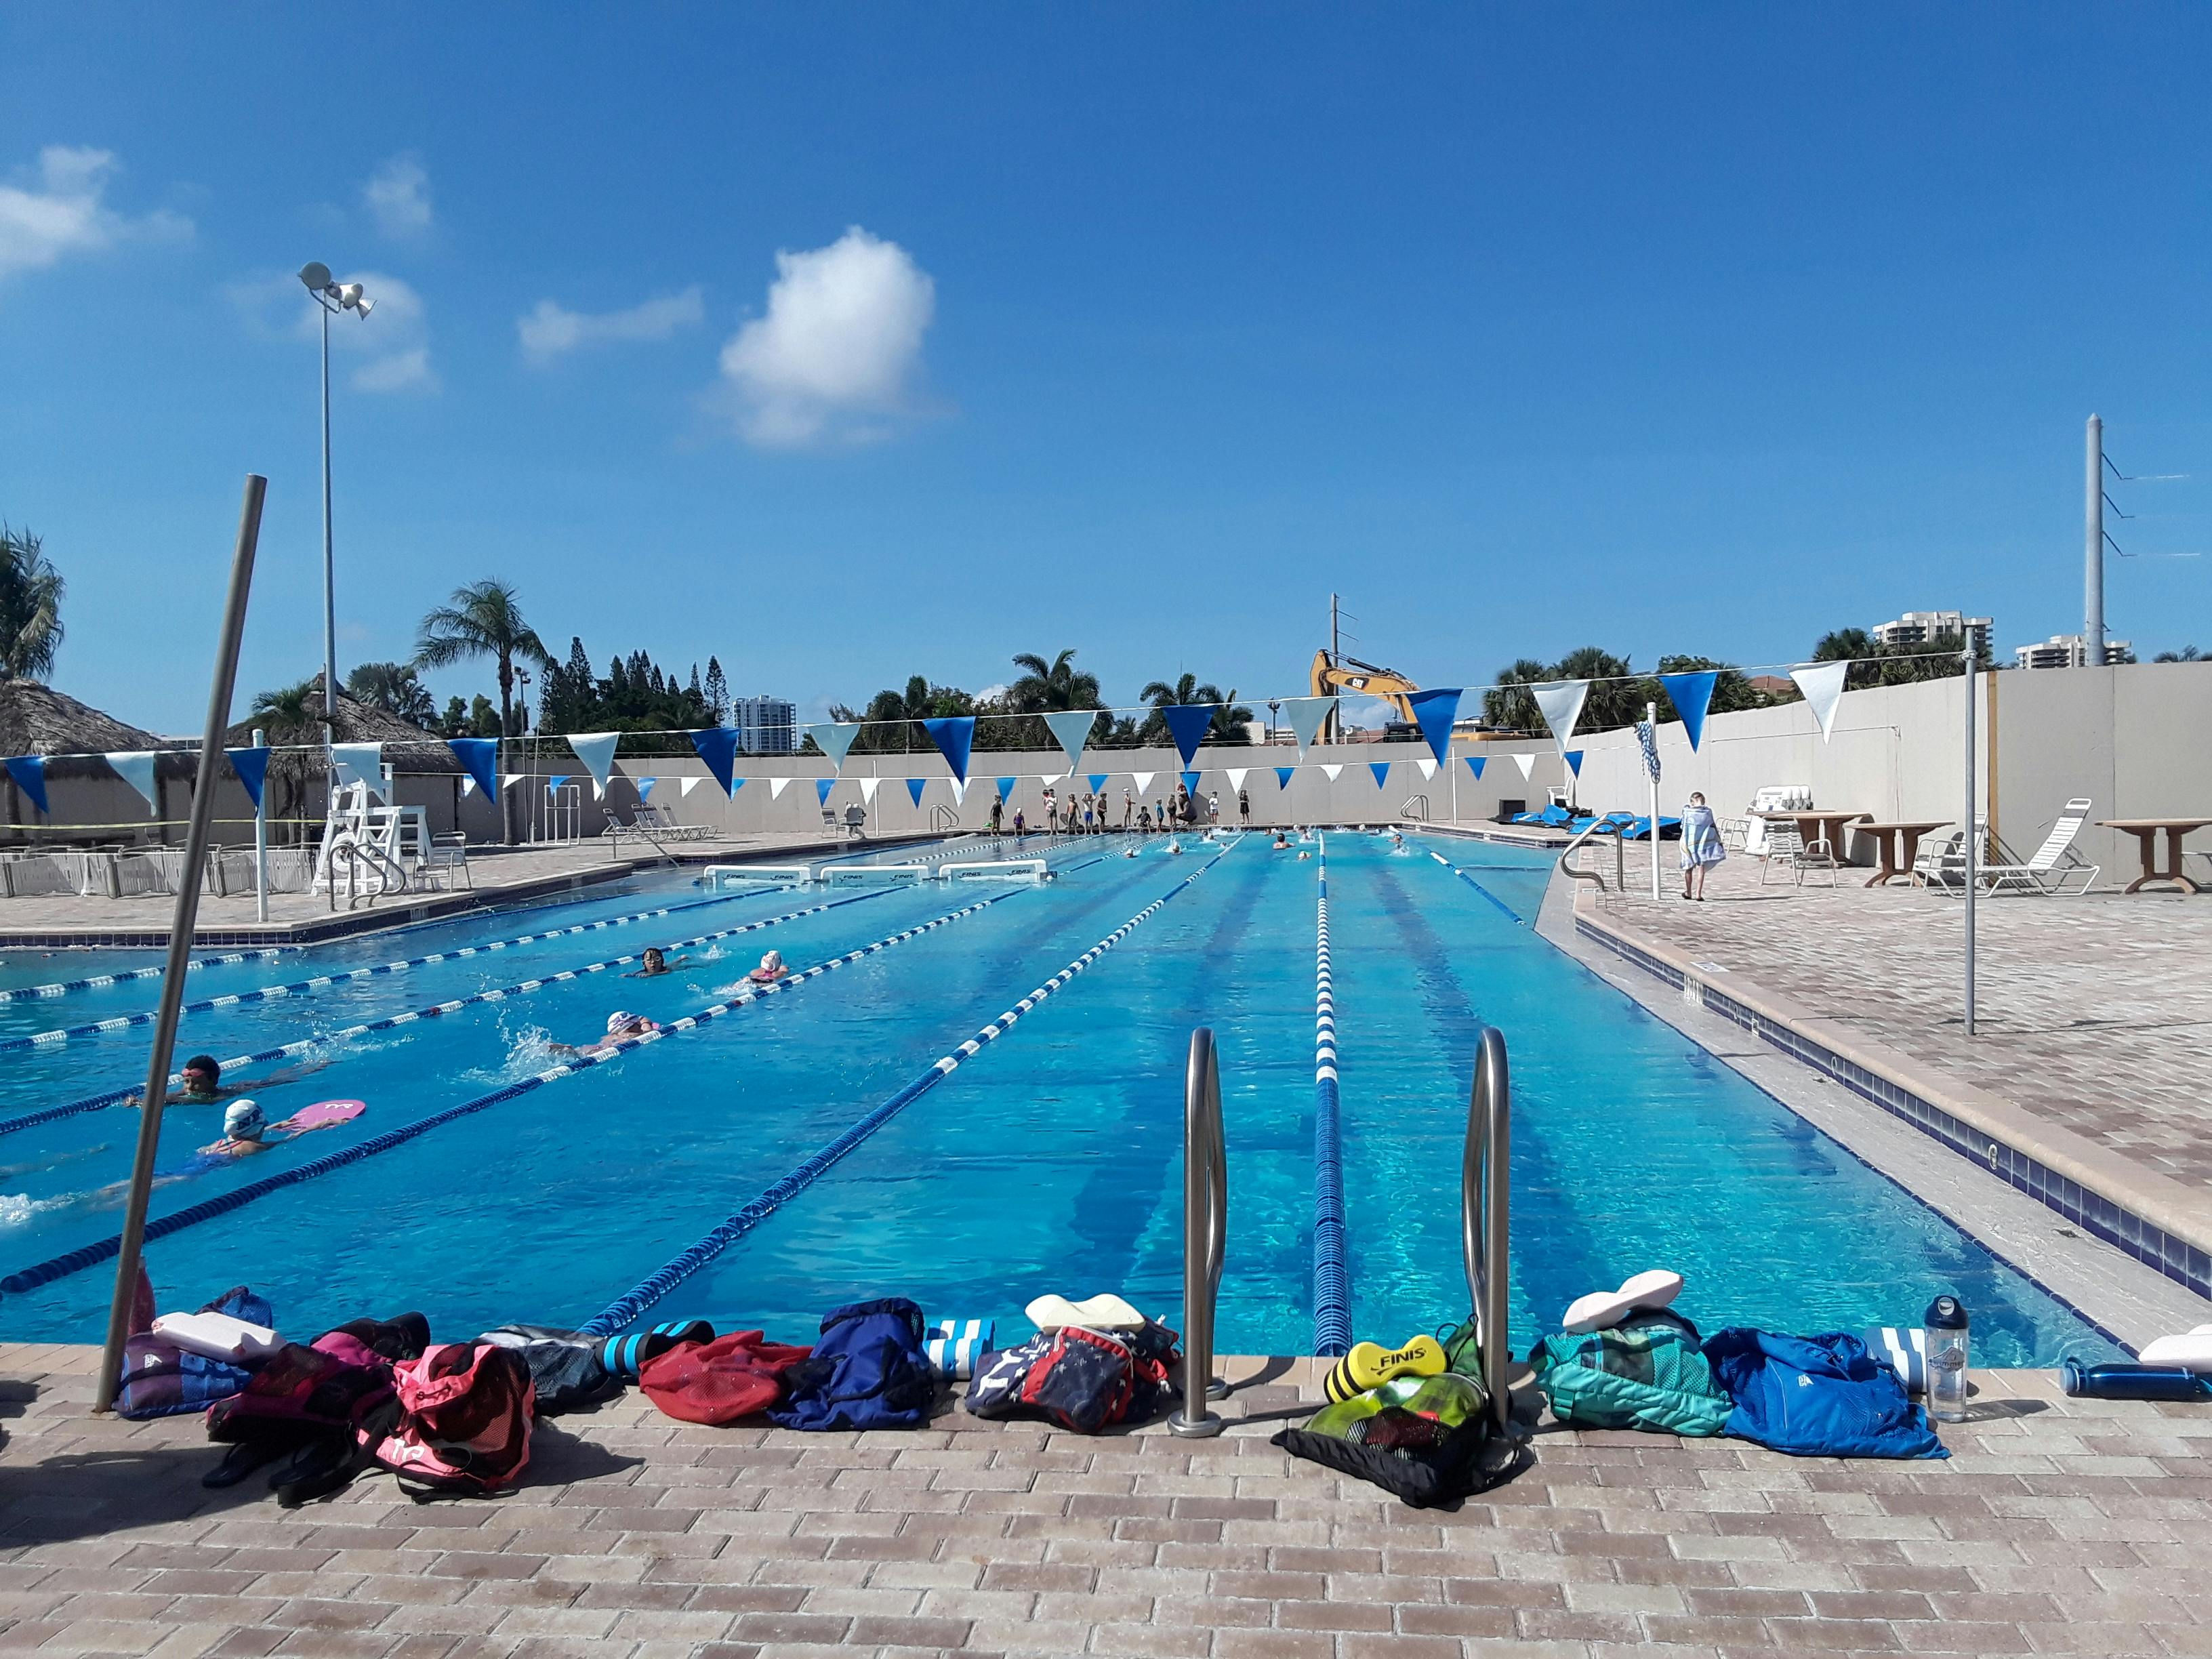 North Palm Beach Pool